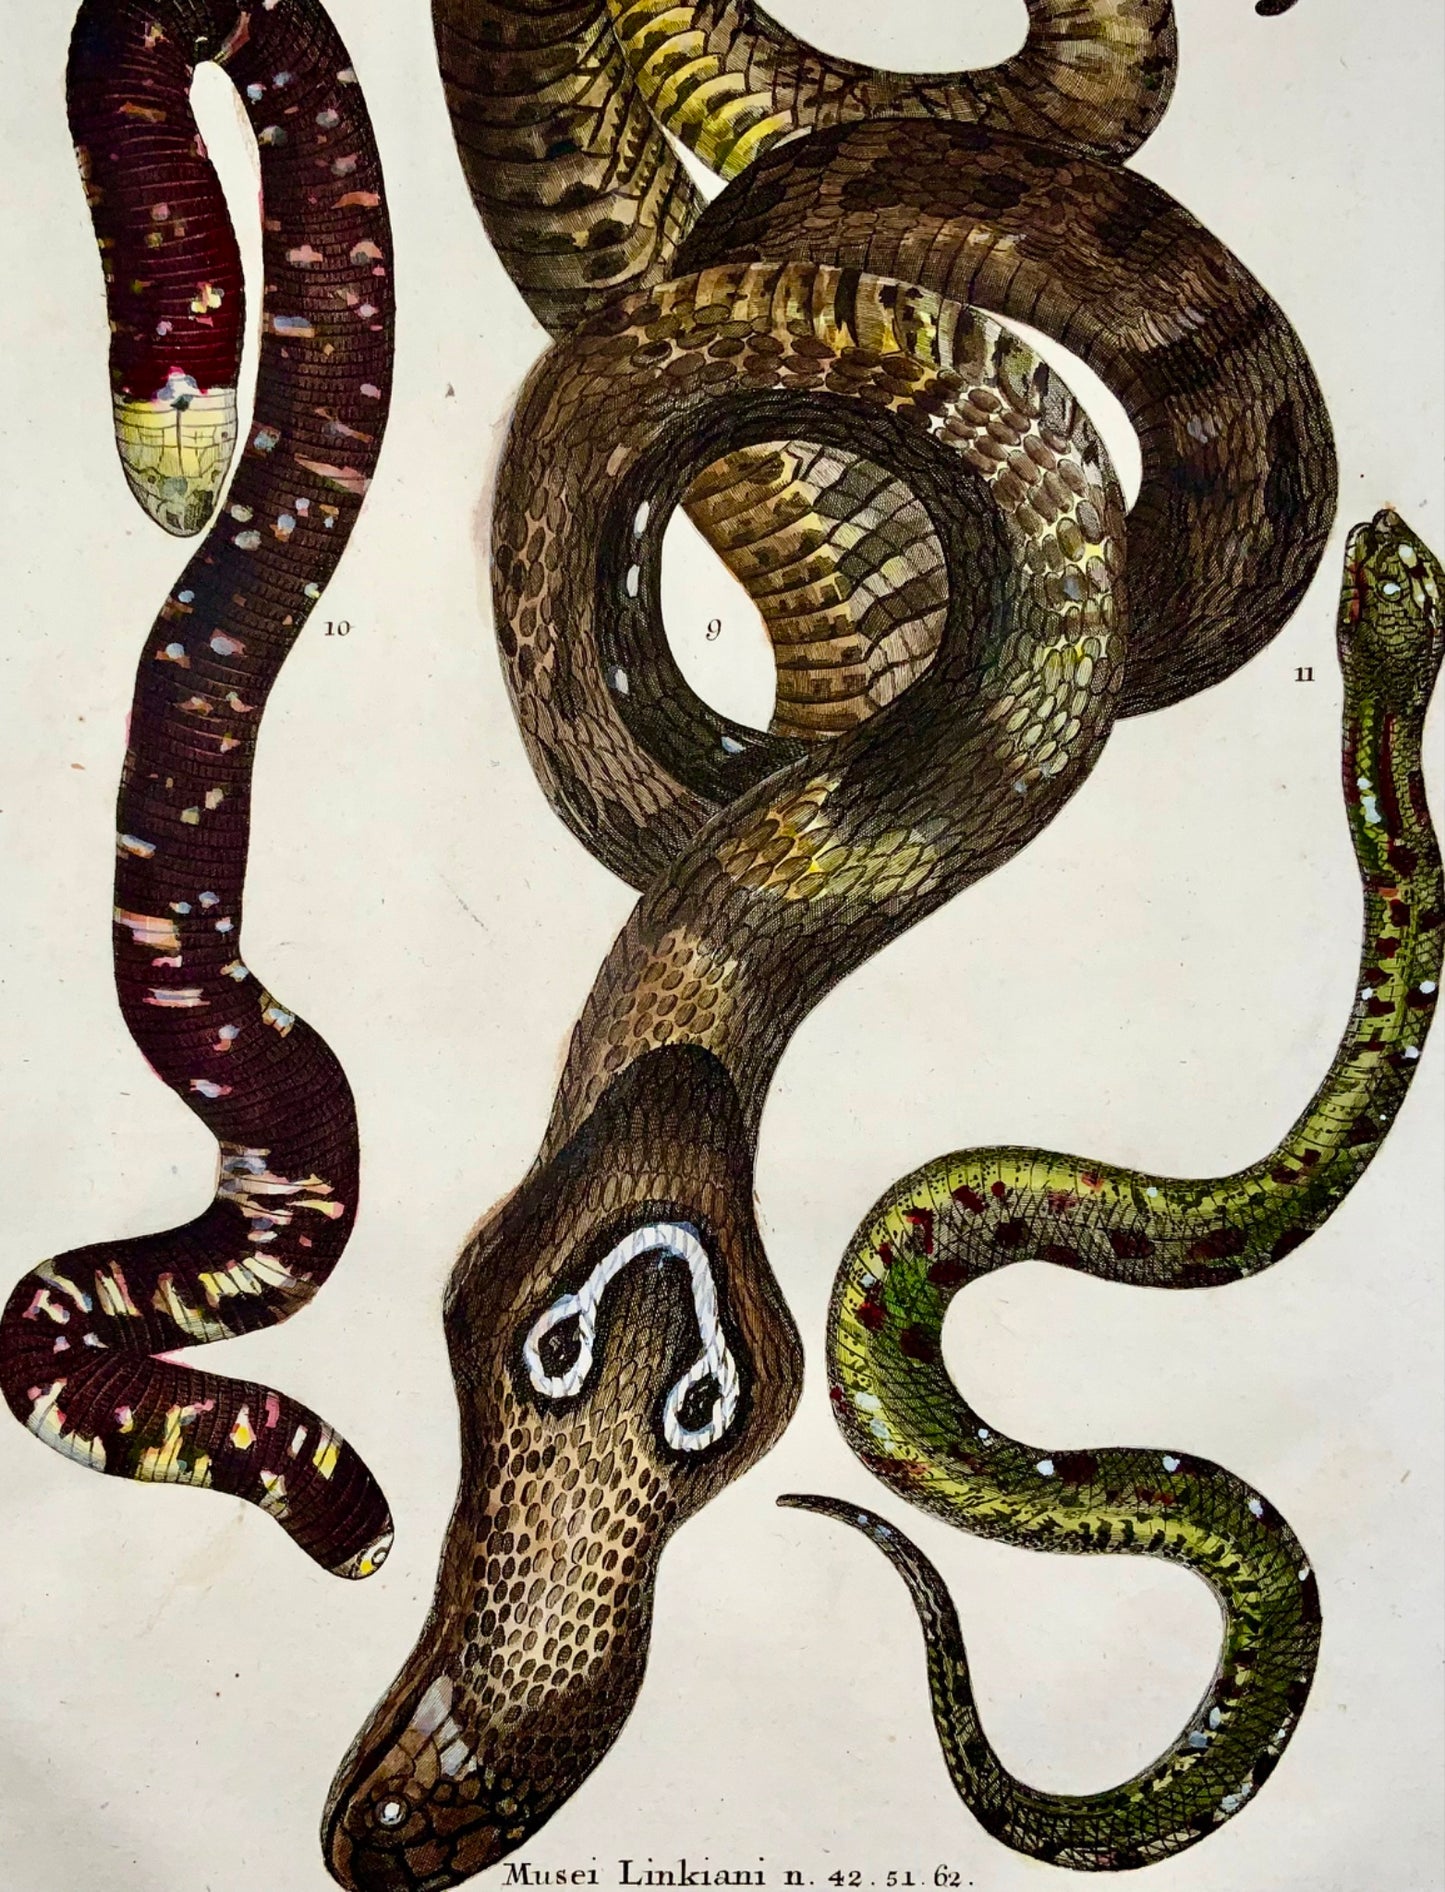 1735 Joh. Jak. Scheuchzer, Spectacle Snake, folio, hand coloured, reptile